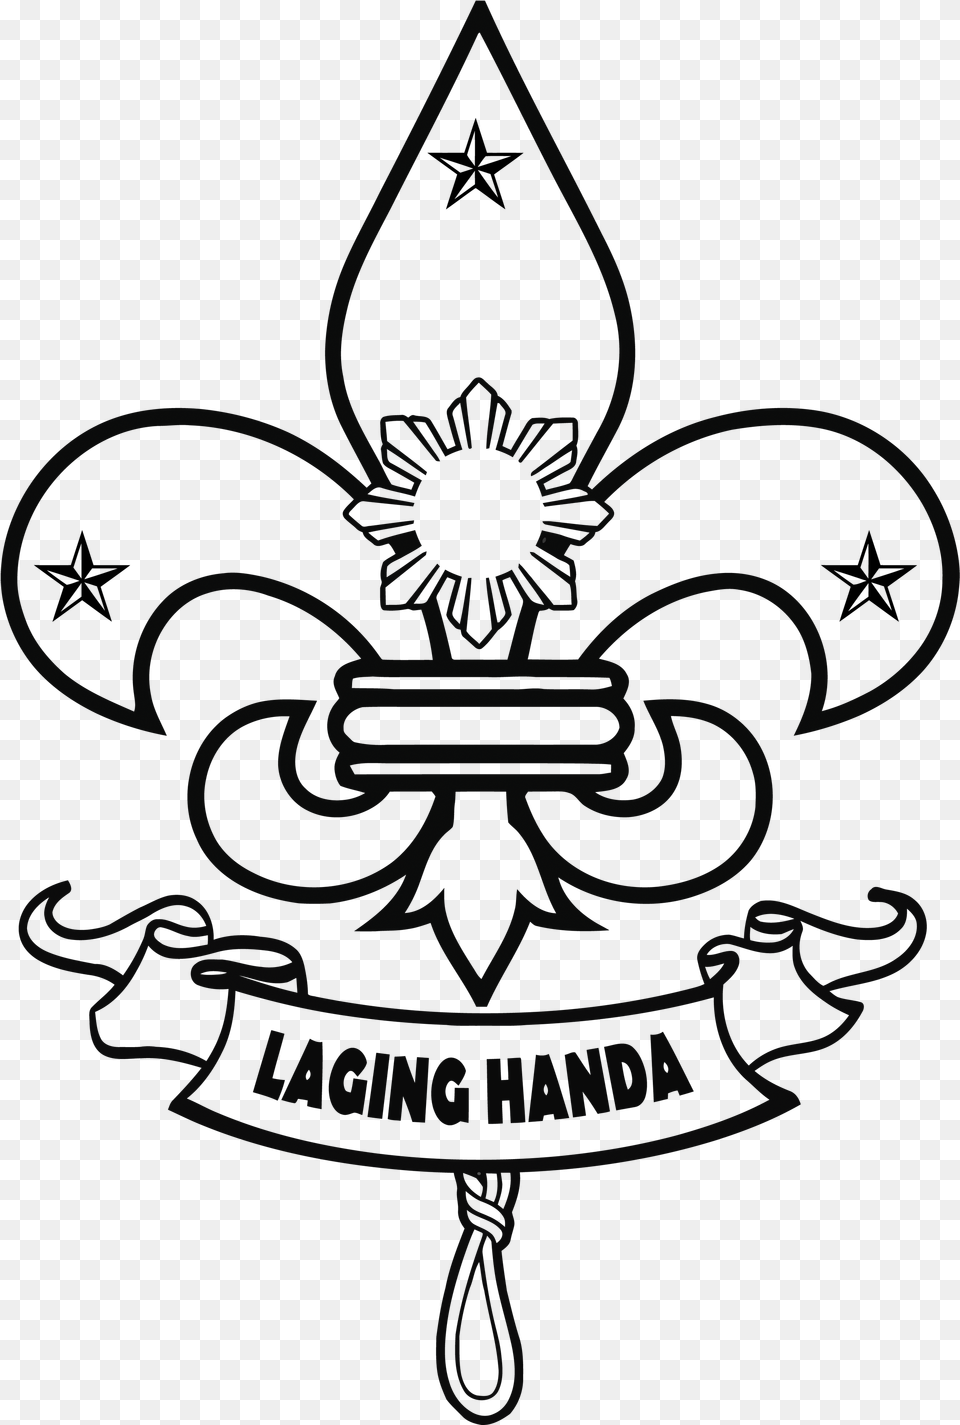 Logo To Vector Services For Bsp Laguna Council Monkey Fleur De Lis Clip Art, Emblem, Symbol Png